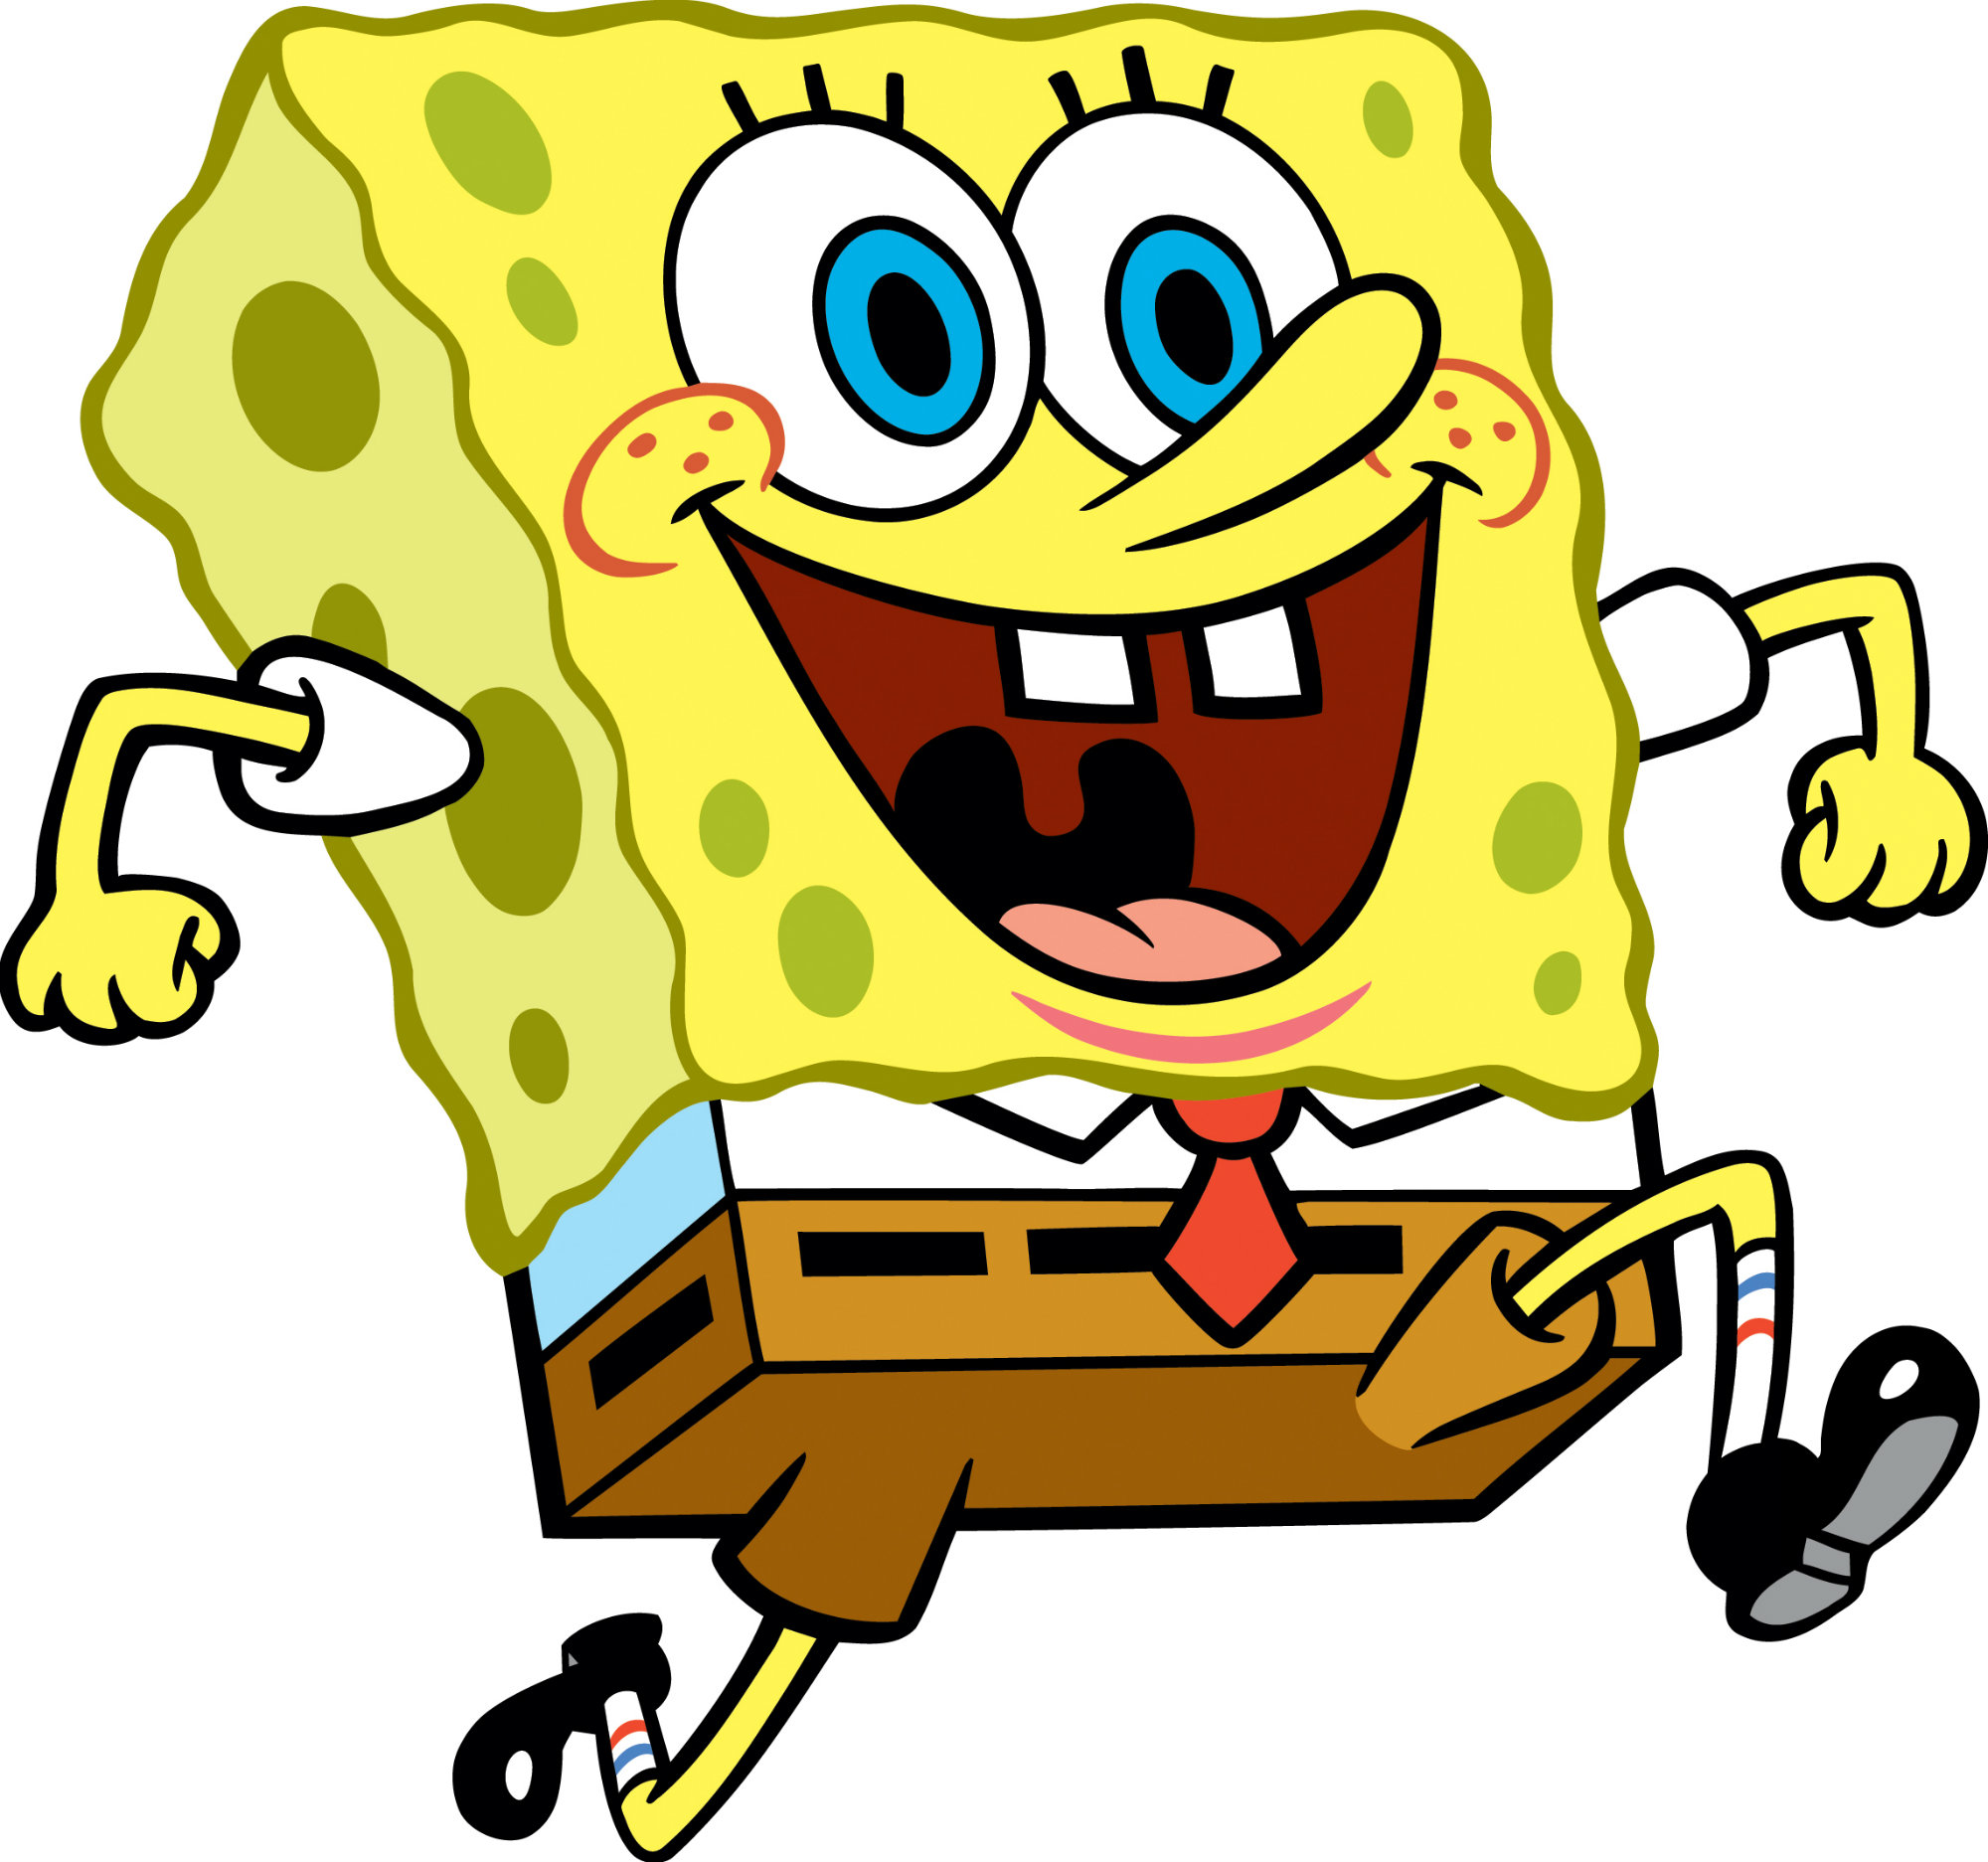 spongebob-spongebob-squarepants-34425372-2000-1873.jpg